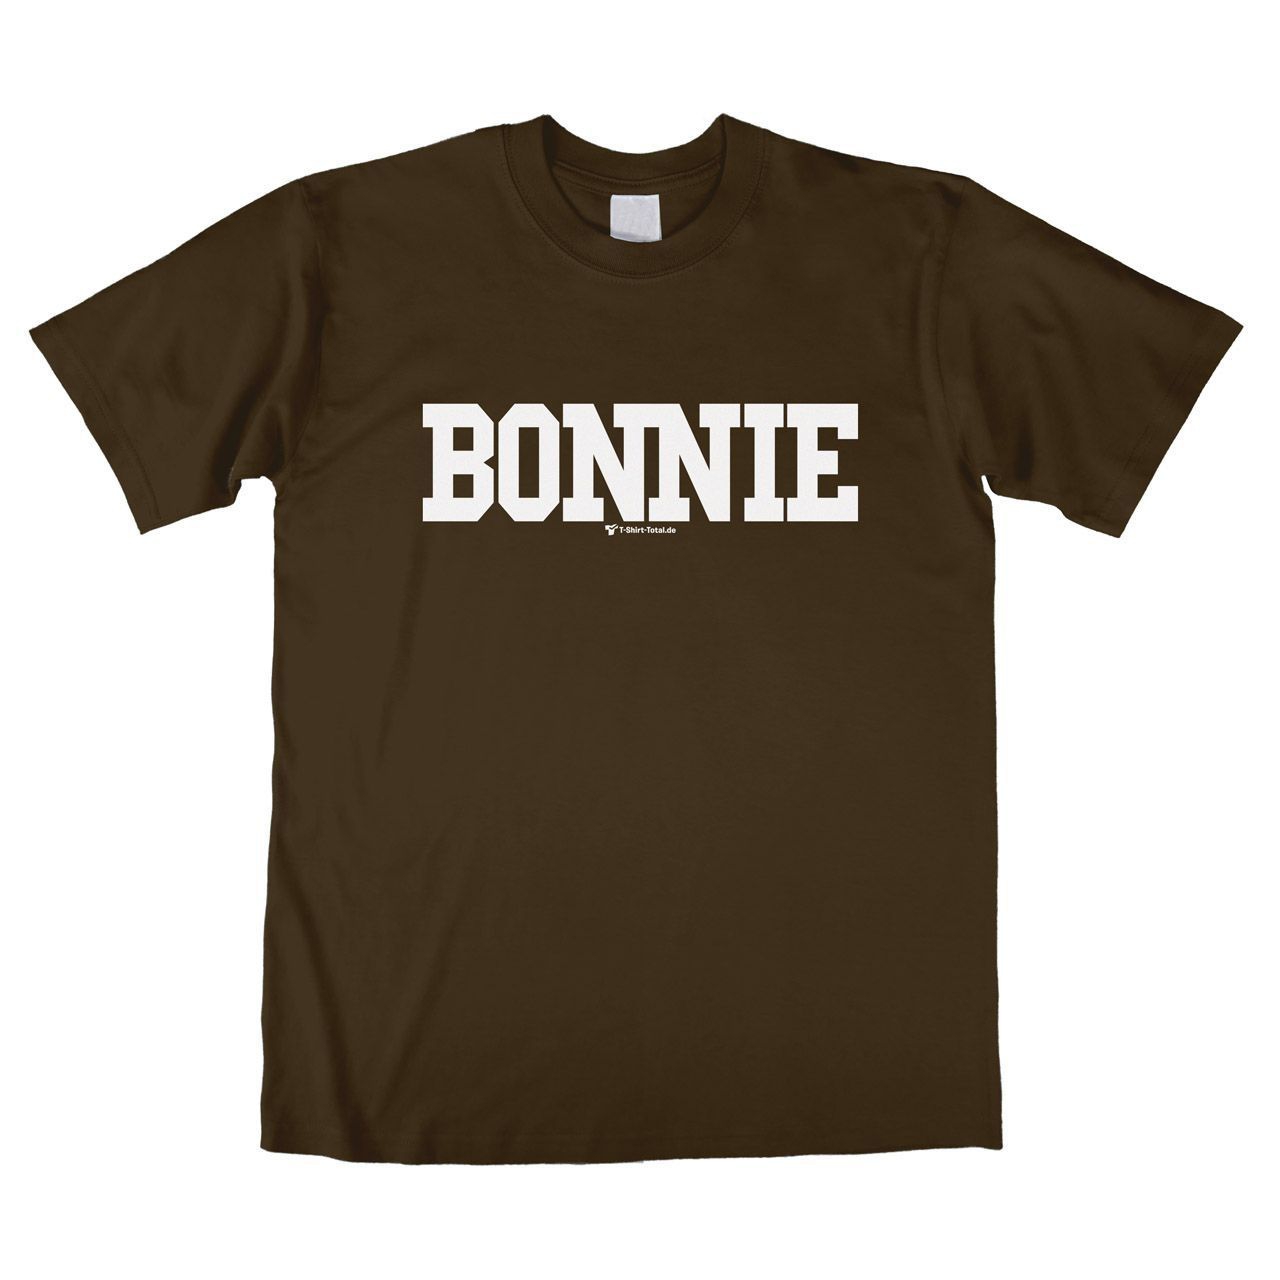 Bonnie Unisex T-Shirt braun Small